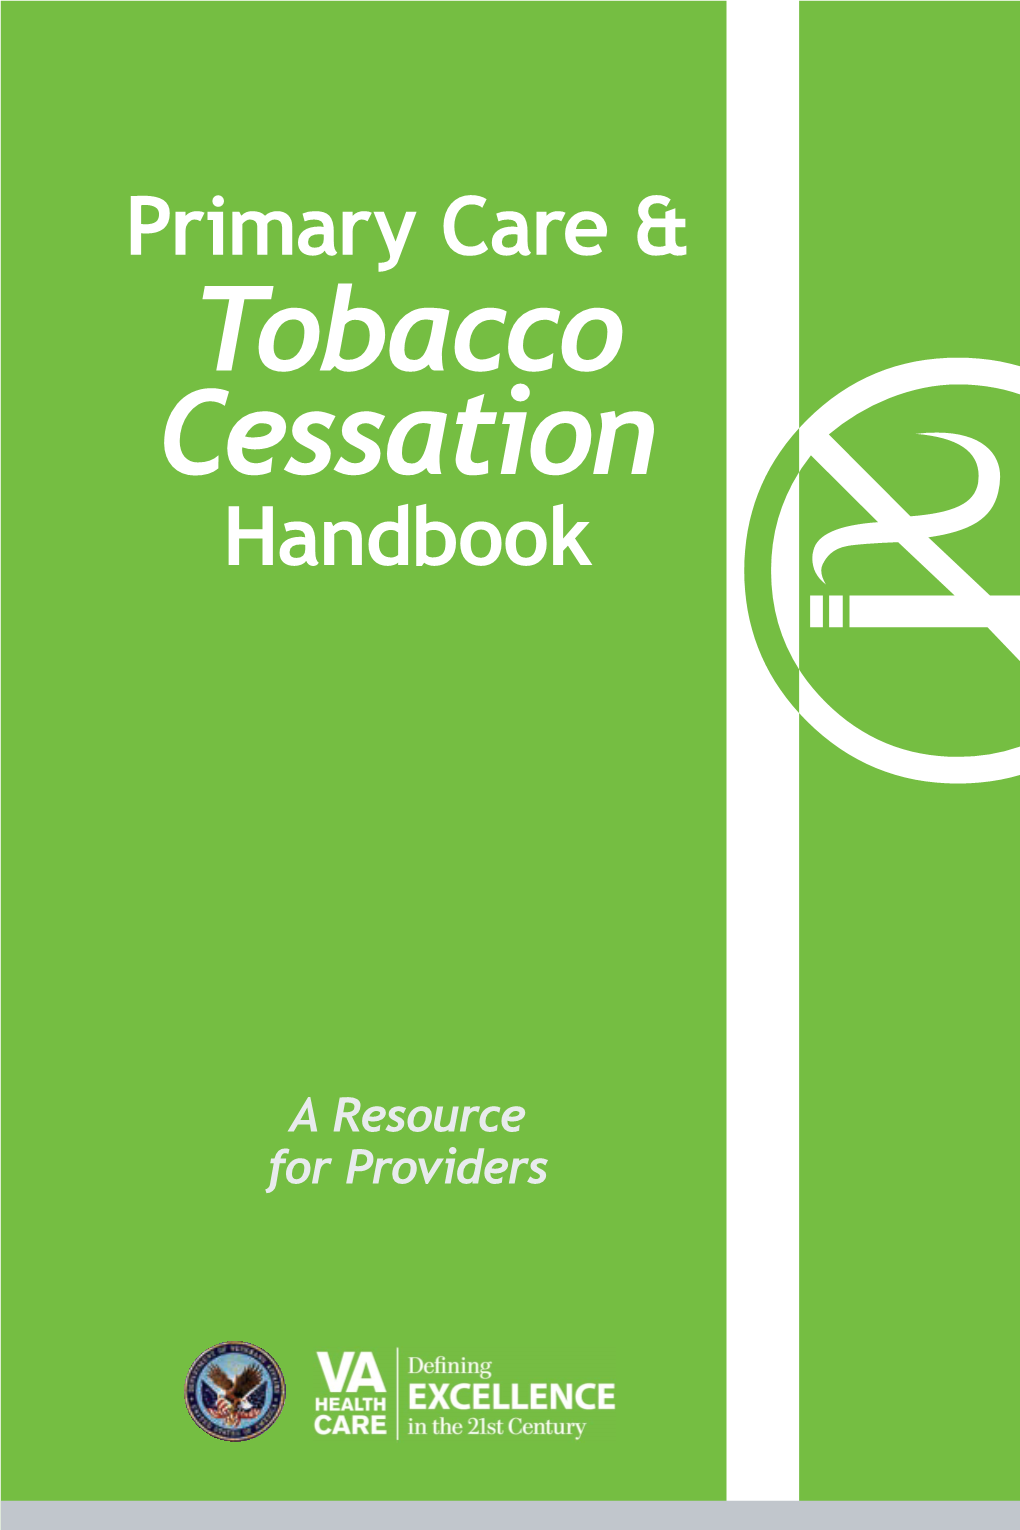 Primary Care & Tobacco Cessation Handbook